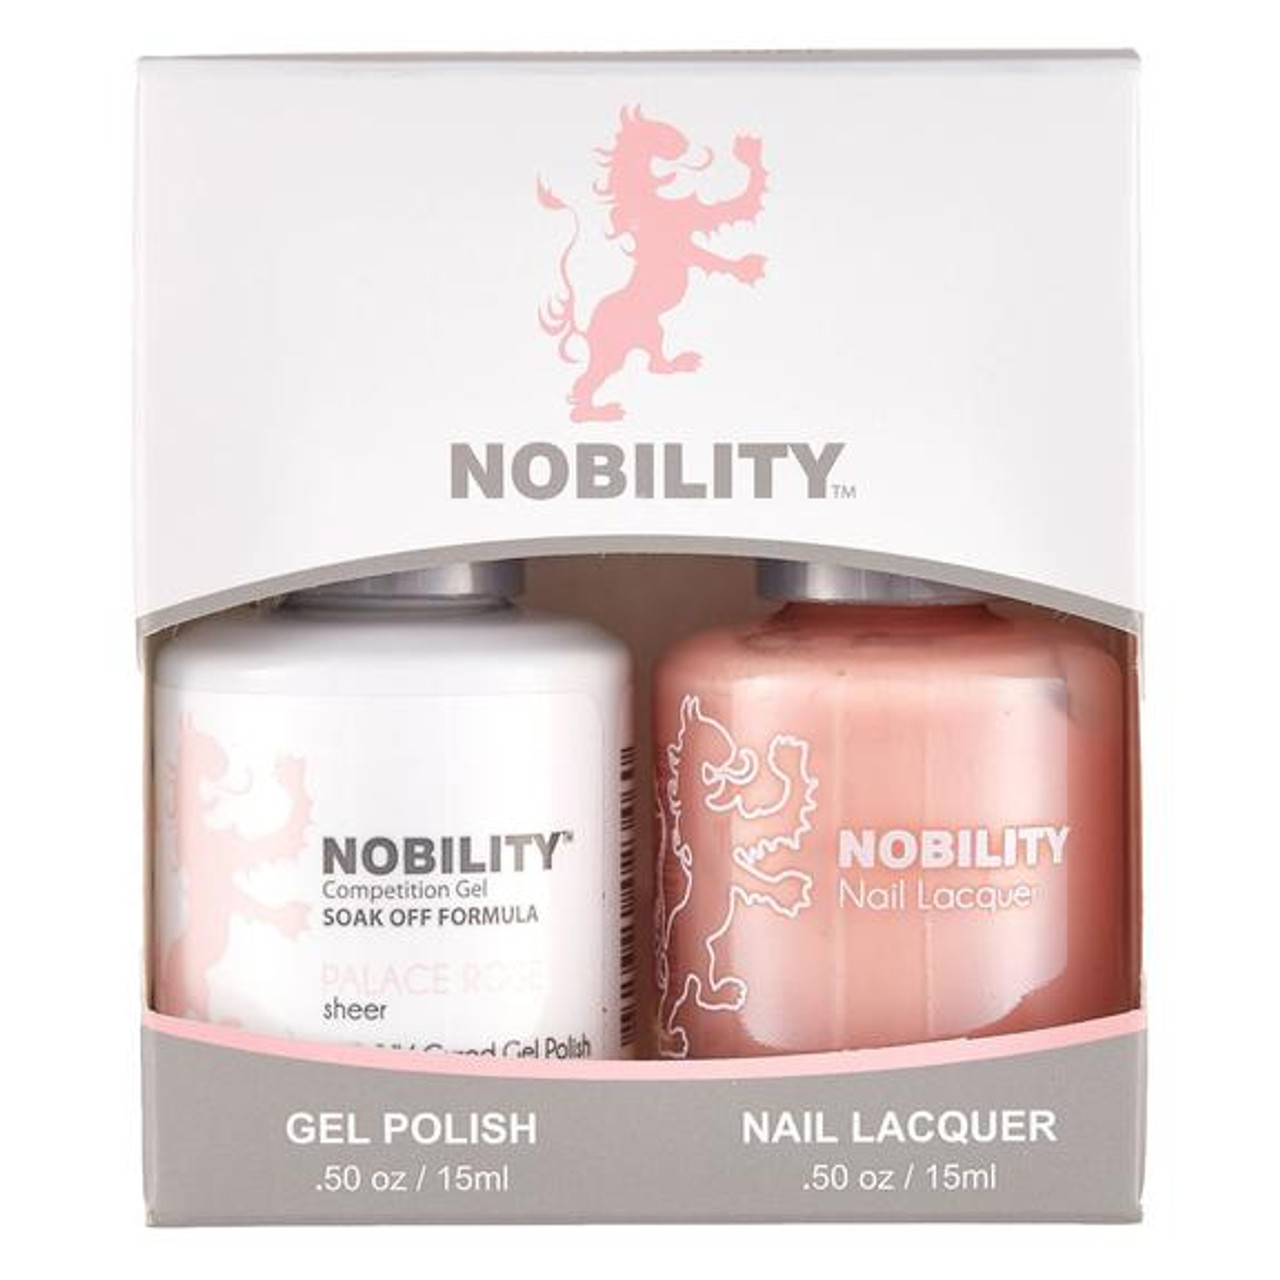 LeChat Nobility Gel Polish & Nail Lacquer Duo Set Palace Rose - .5 oz / 15 ml